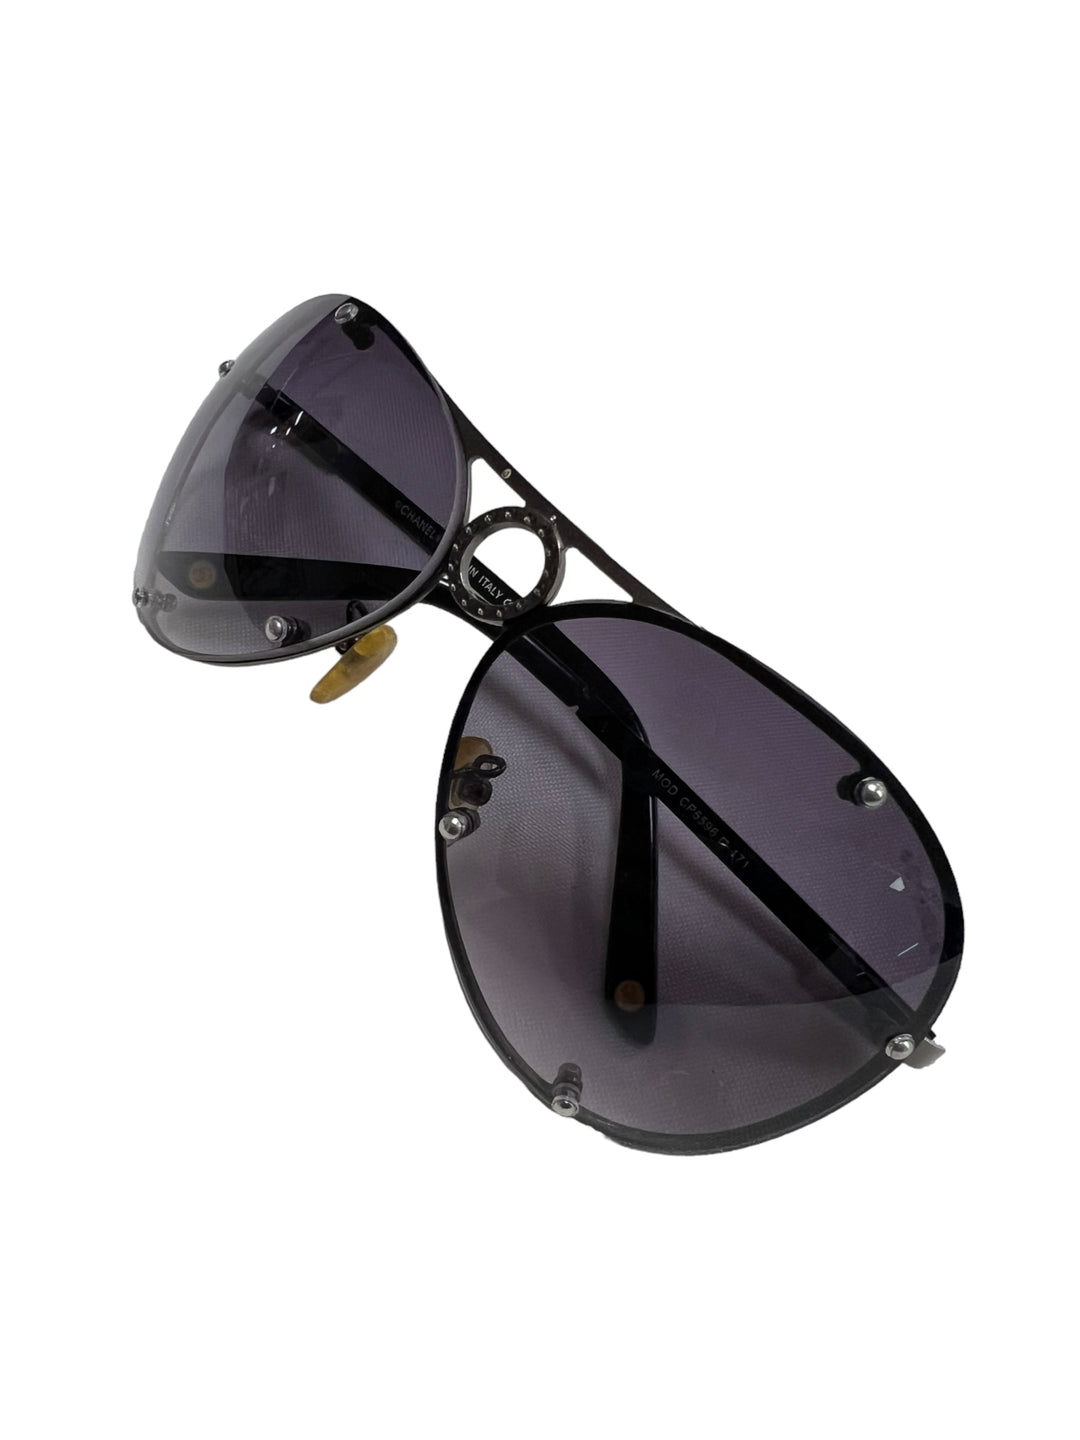 Chanel Vintage sunglasses